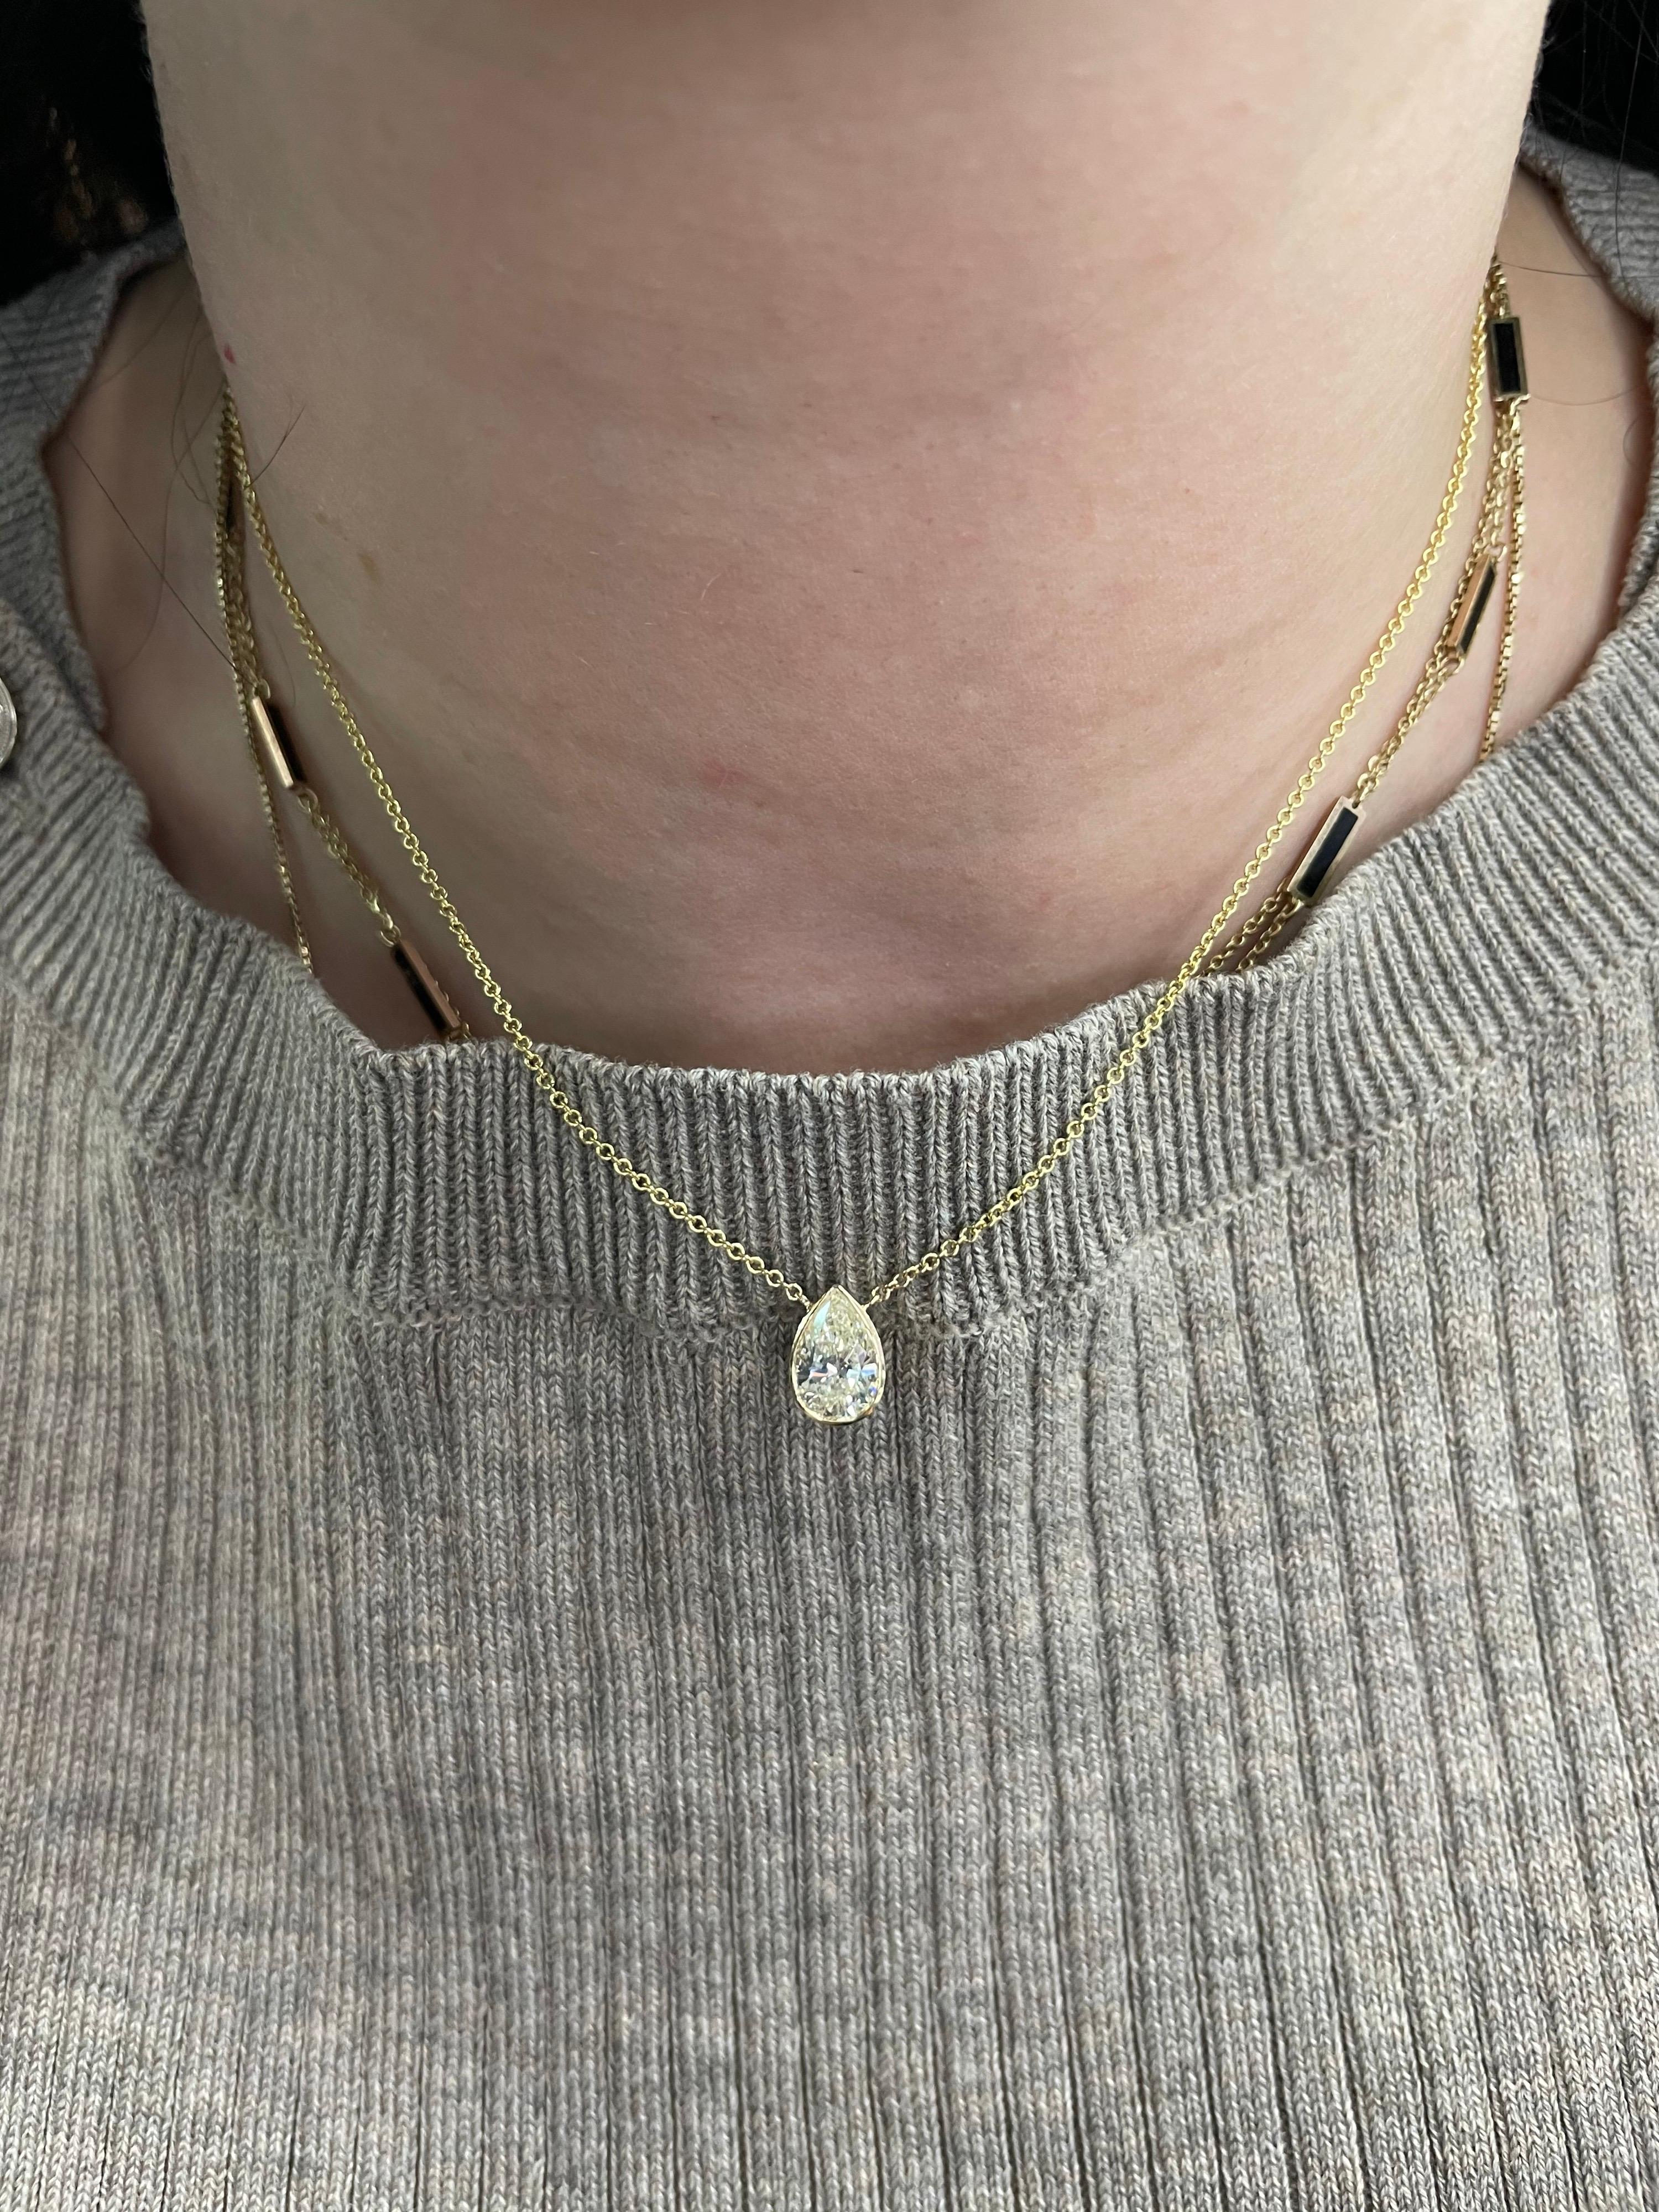 Pear Cut Pear Shape Diamond Solitaire Pendant Necklace 1.32 Carats 14 Karat Yellow Gold